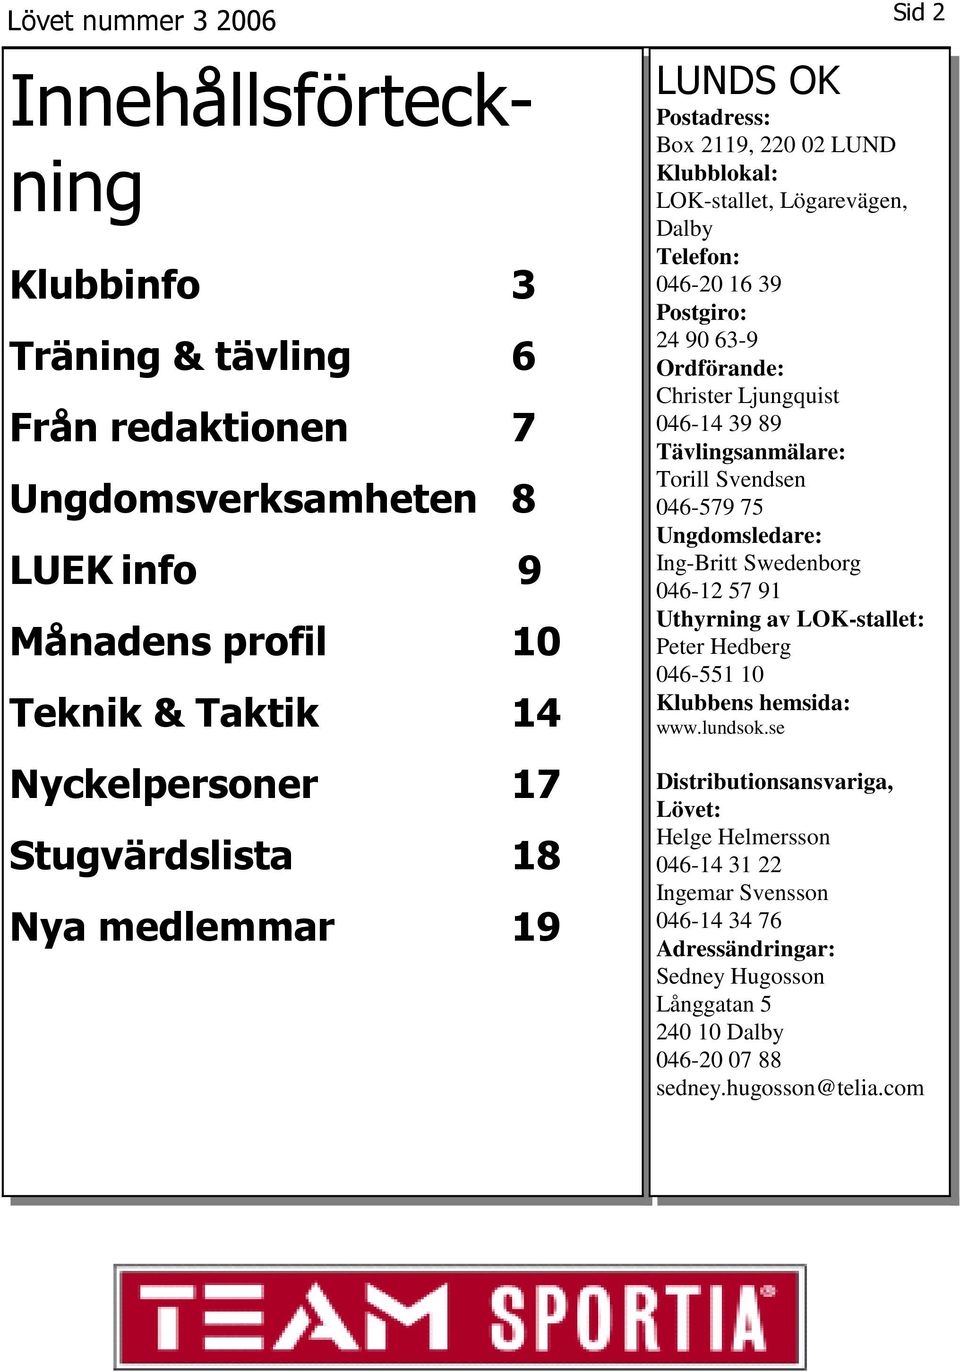 39 89 Tävlingsanmälare: Torill Svendsen 046-579 75 Ungdomsledare: Ing-Britt Swedenborg 046-12 57 91 Uthyrning av LOK-stallet: Peter Hedberg 046-551 10 Klubbens hemsida: www.lundsok.